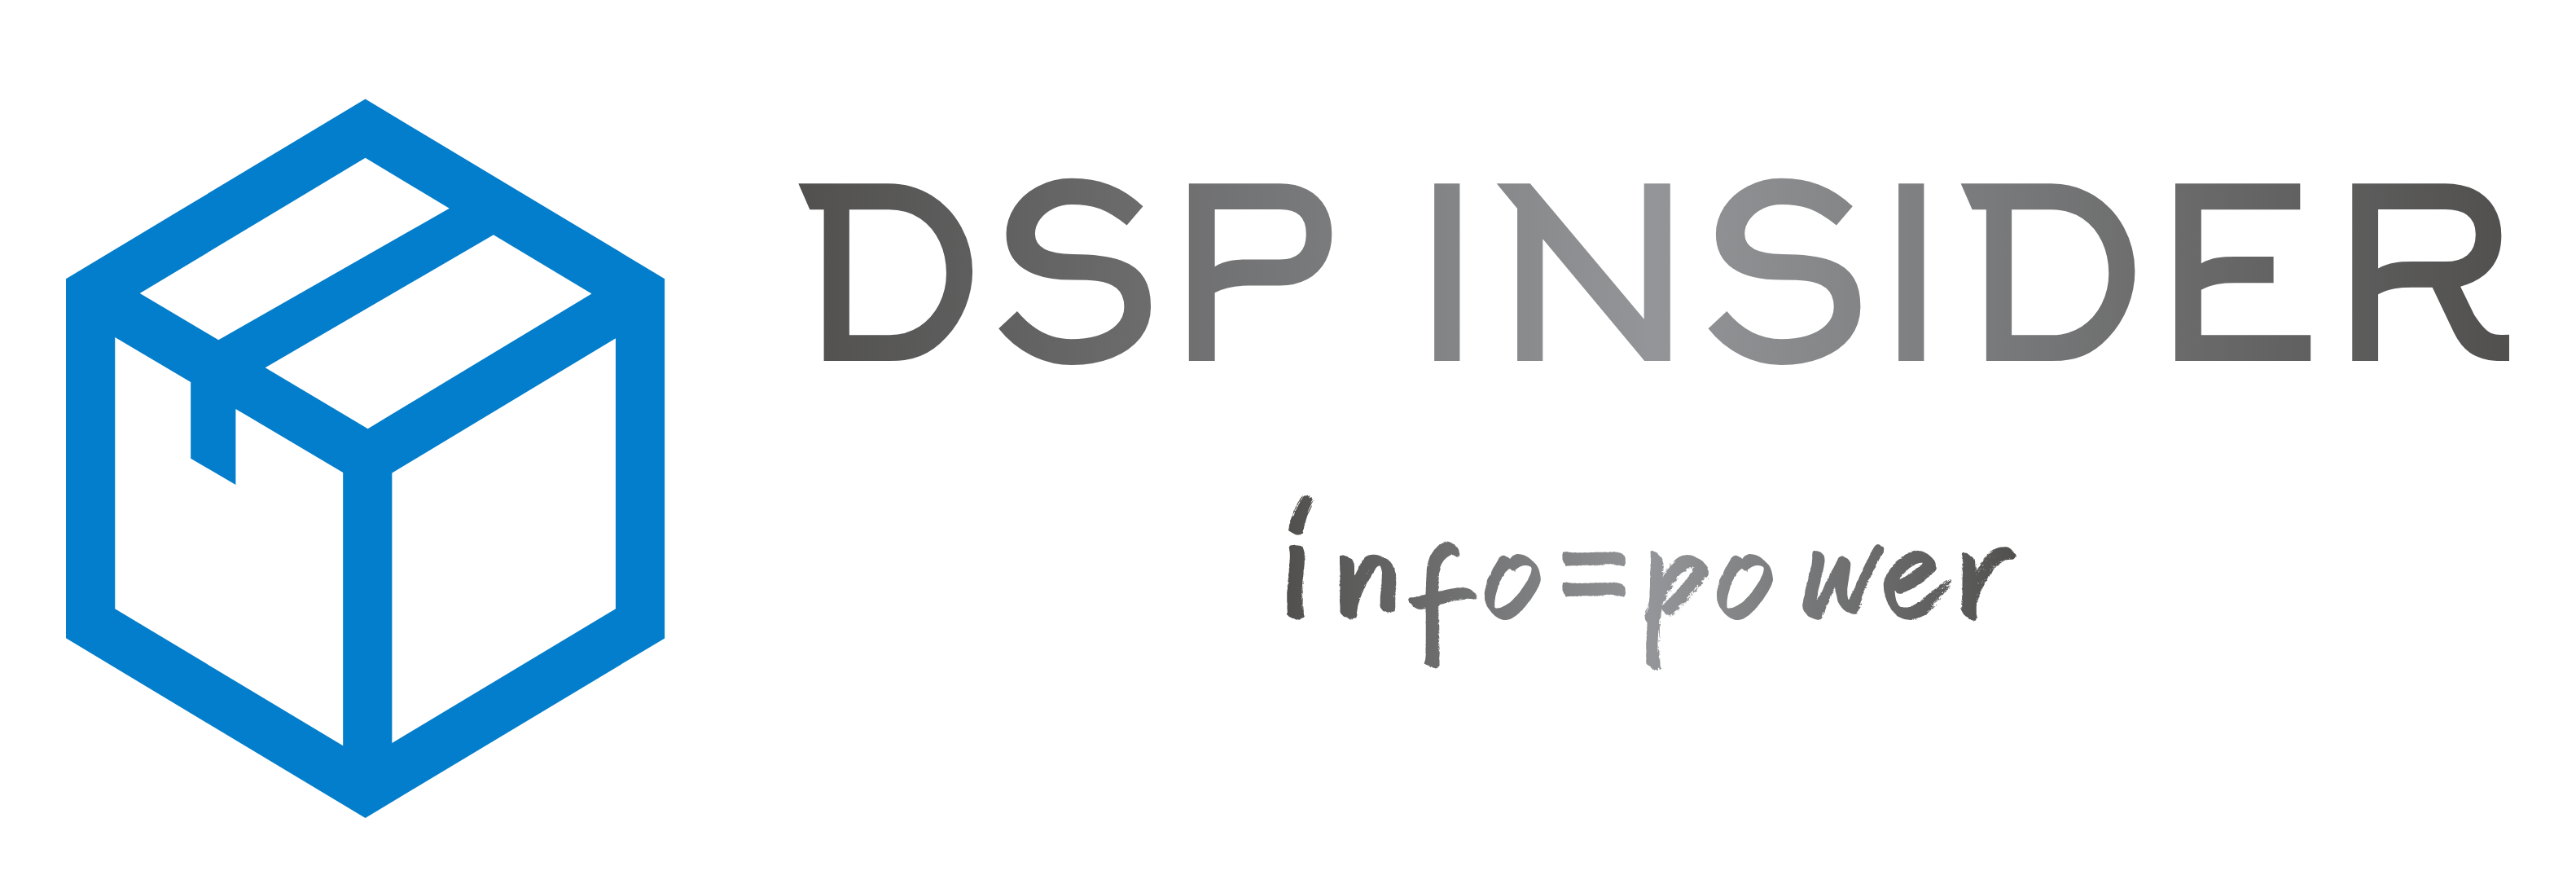 DSP Insider